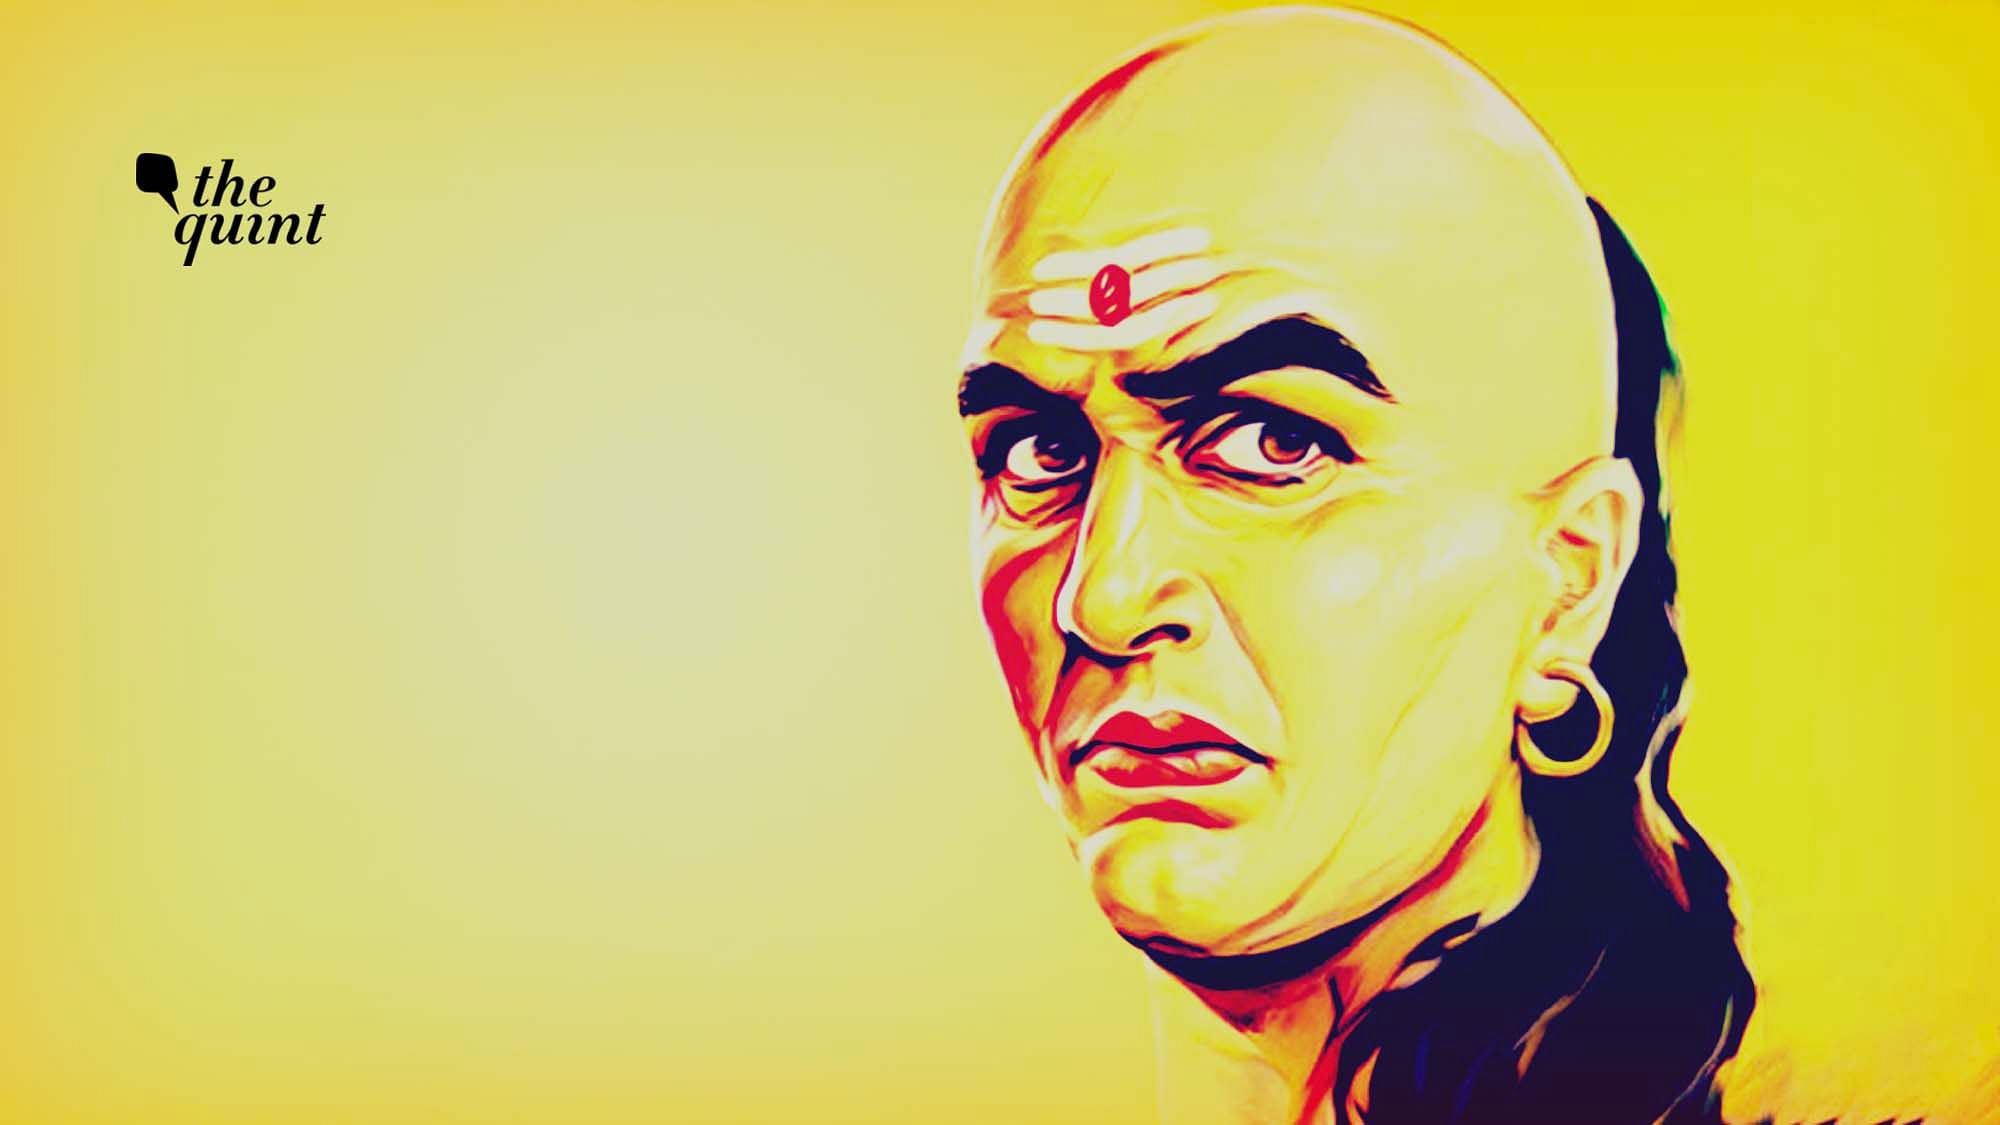 Image of Chanakya used for representational purposes.